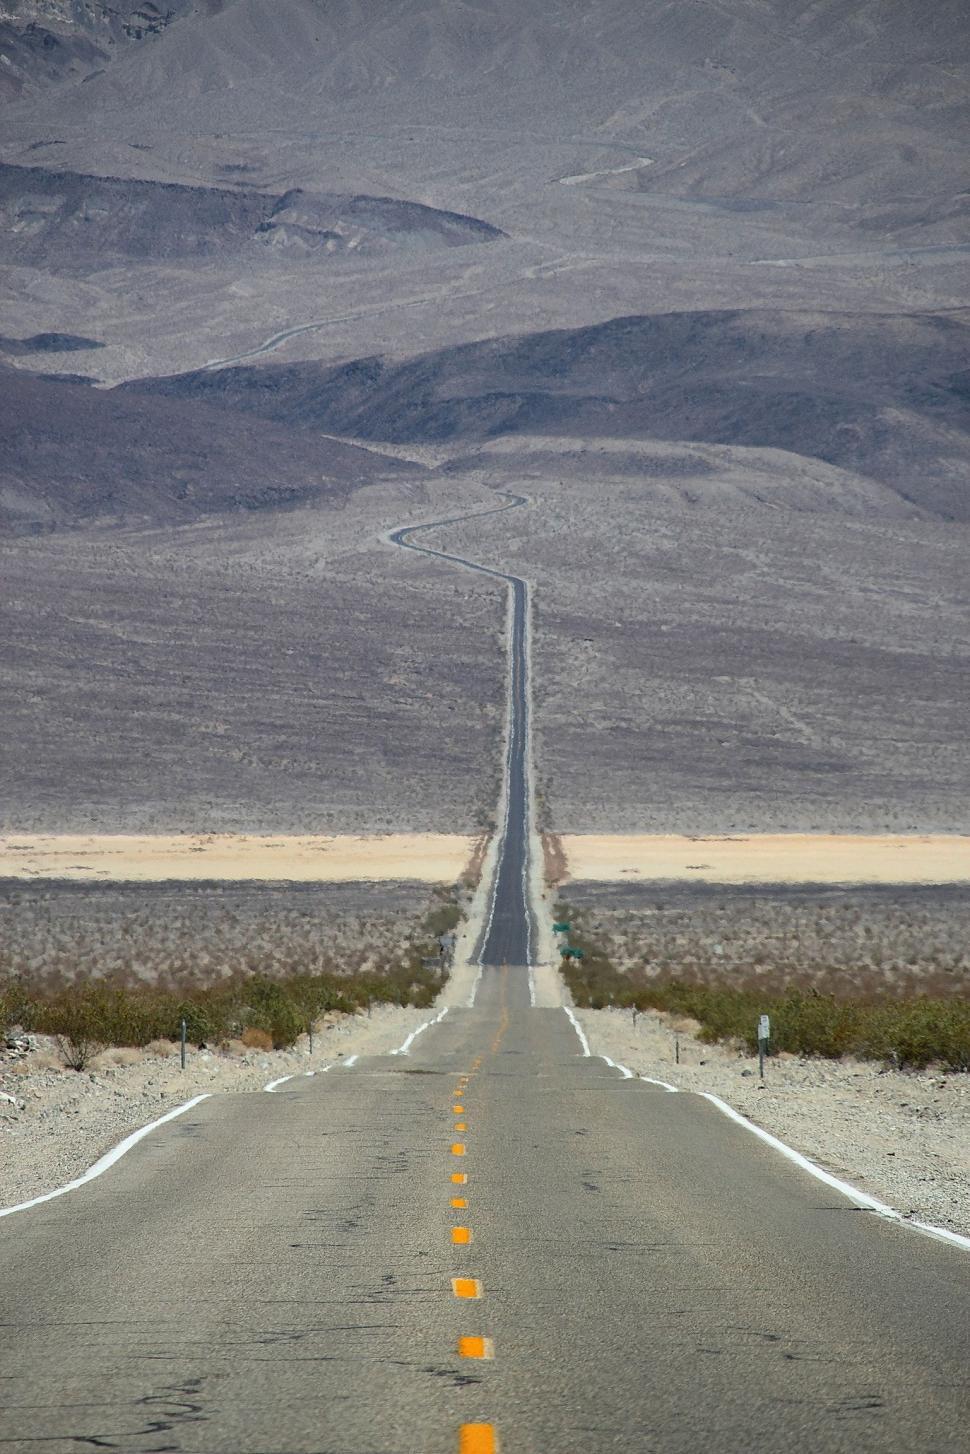 Free Image of Remote Road in Desolate Landscape 